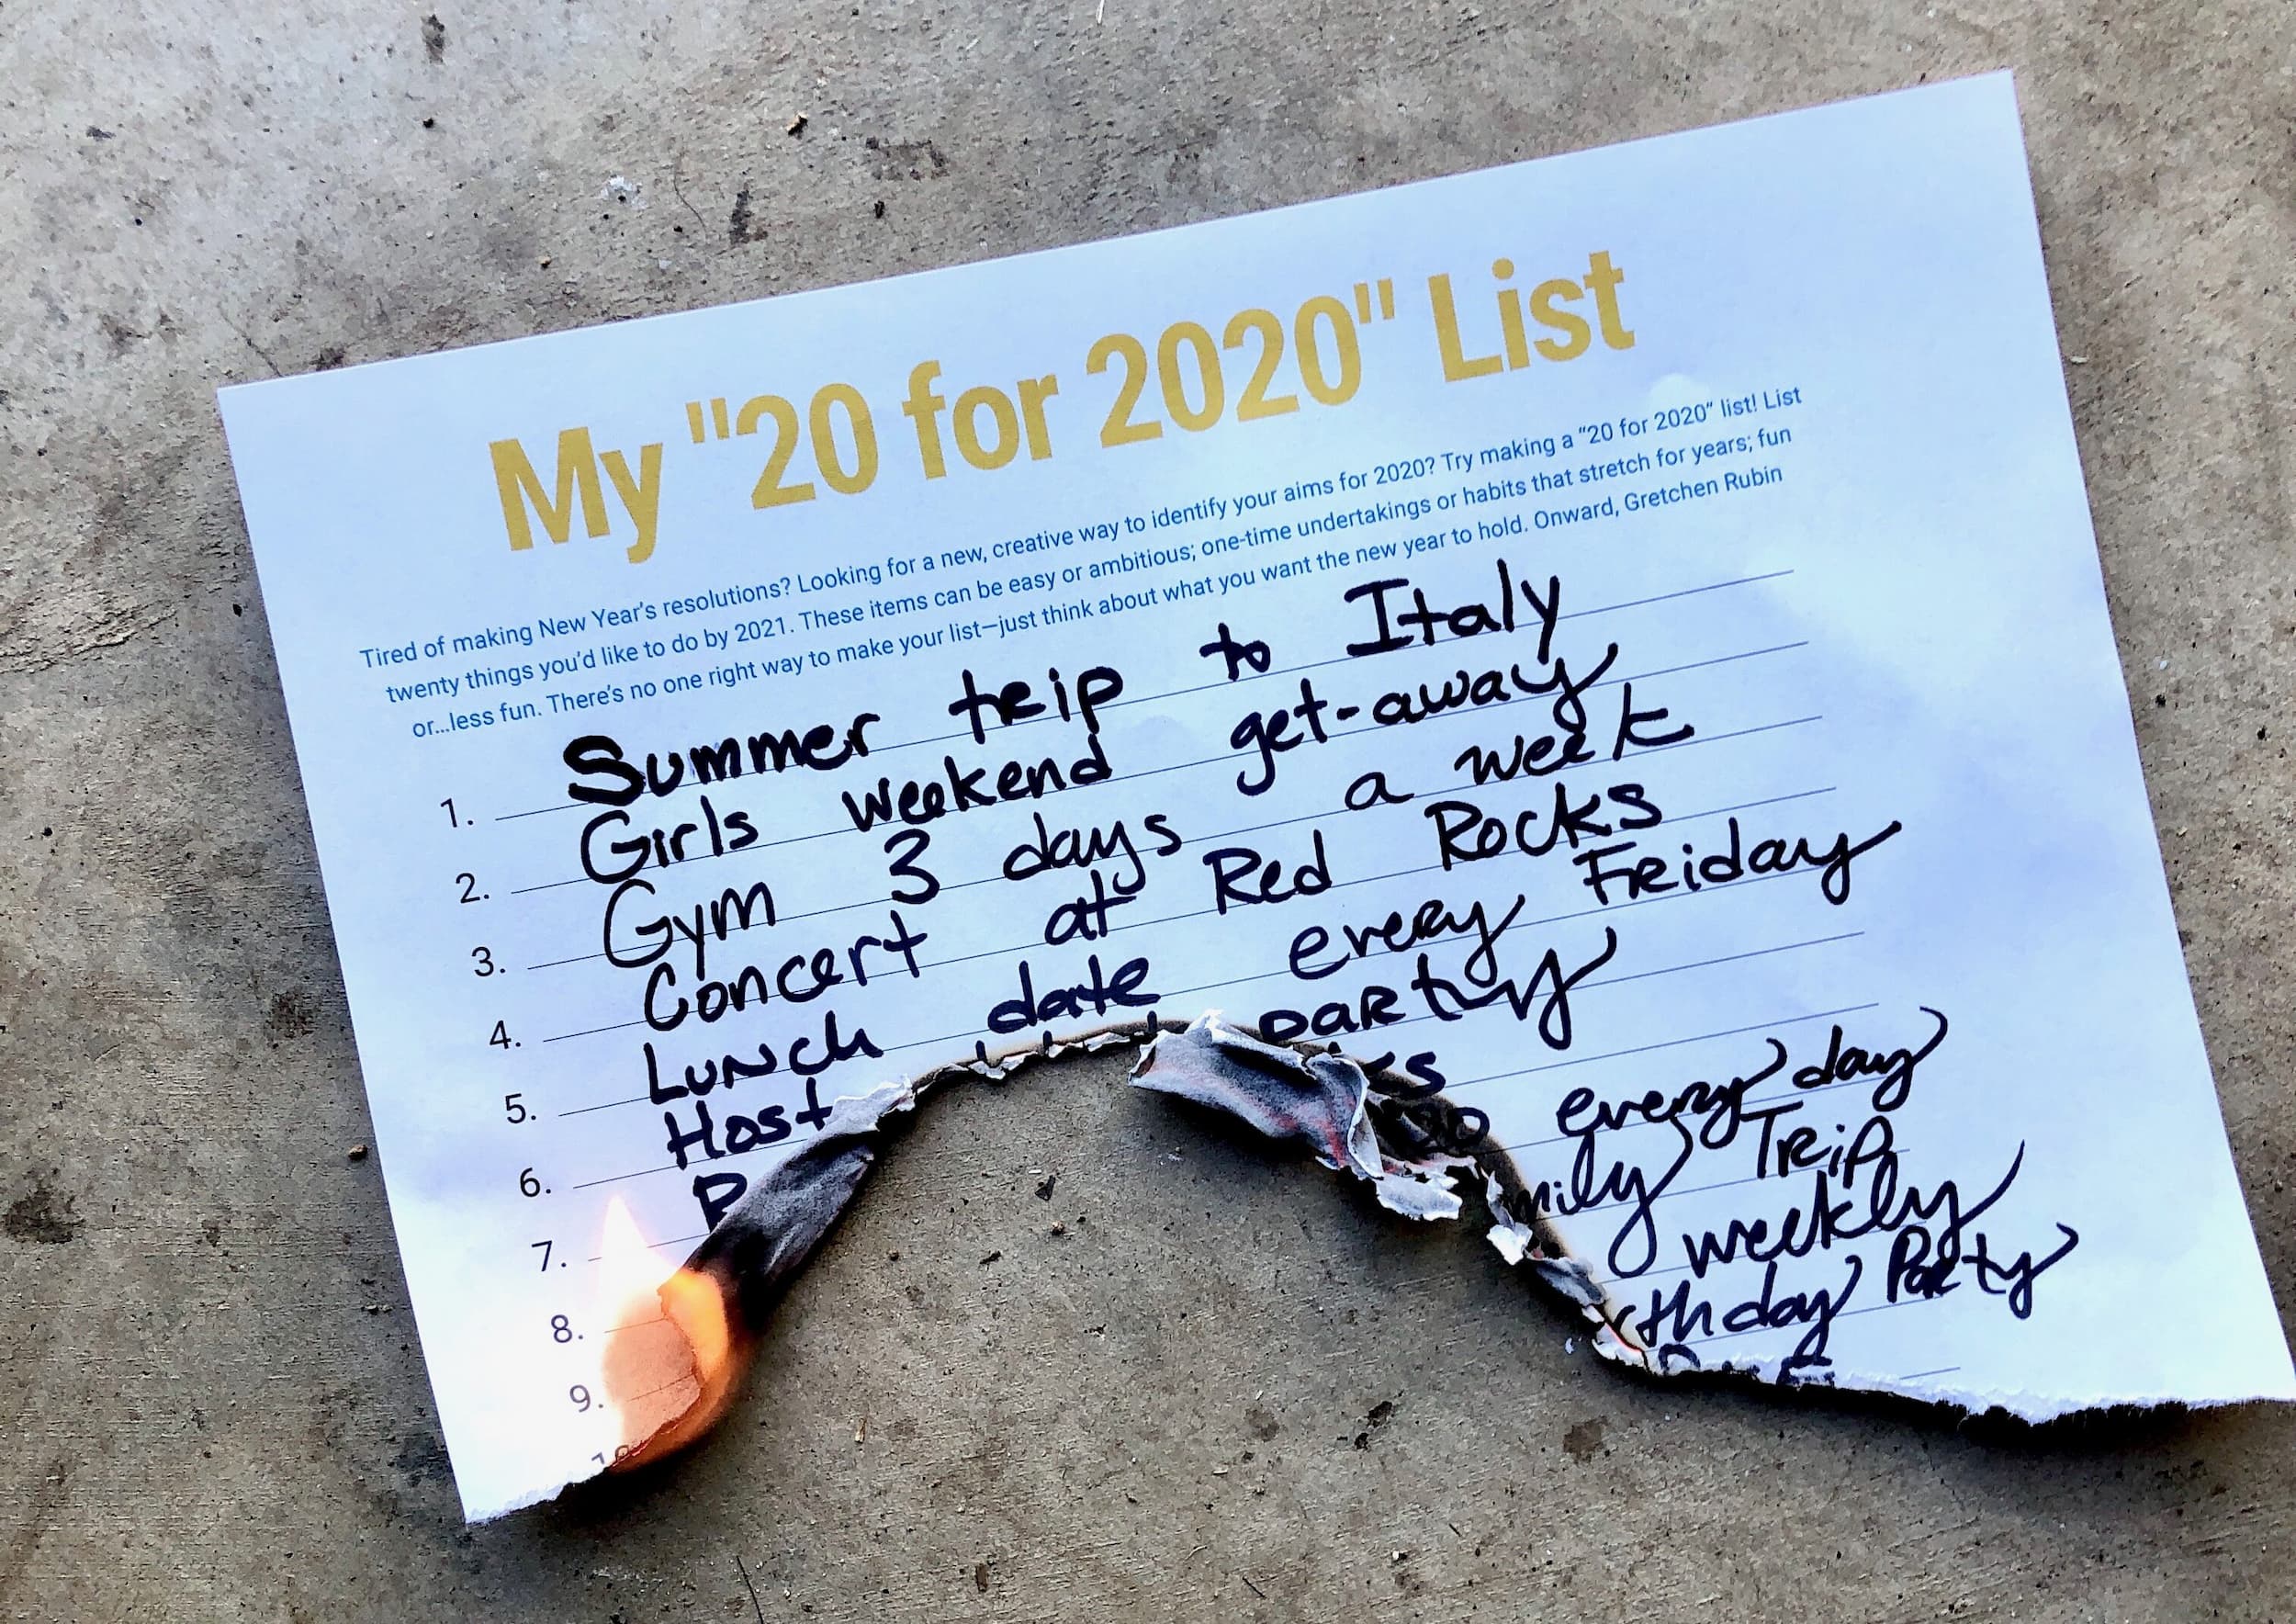 Gretchen burning her 20 for 2020 list